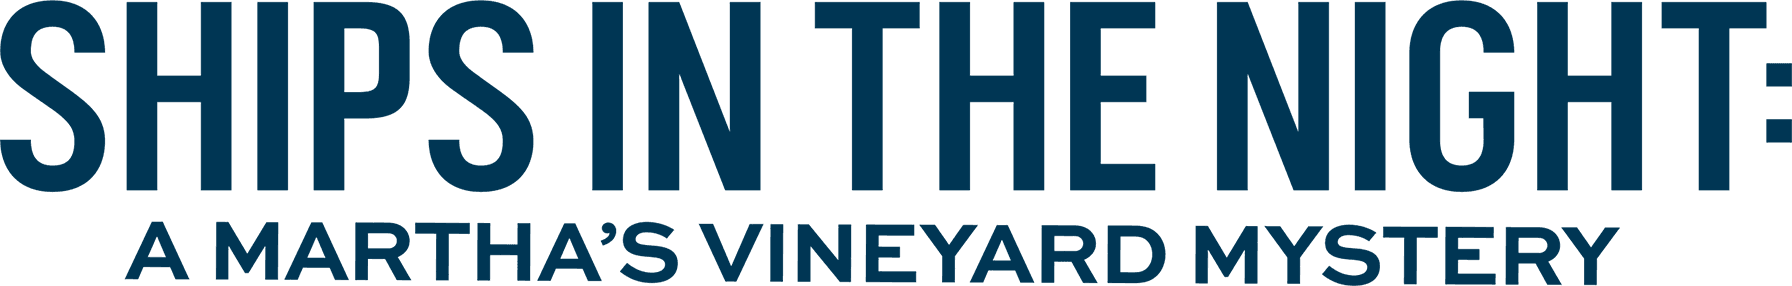 Ships in the Night: A Martha's Vineyard Mystery logo